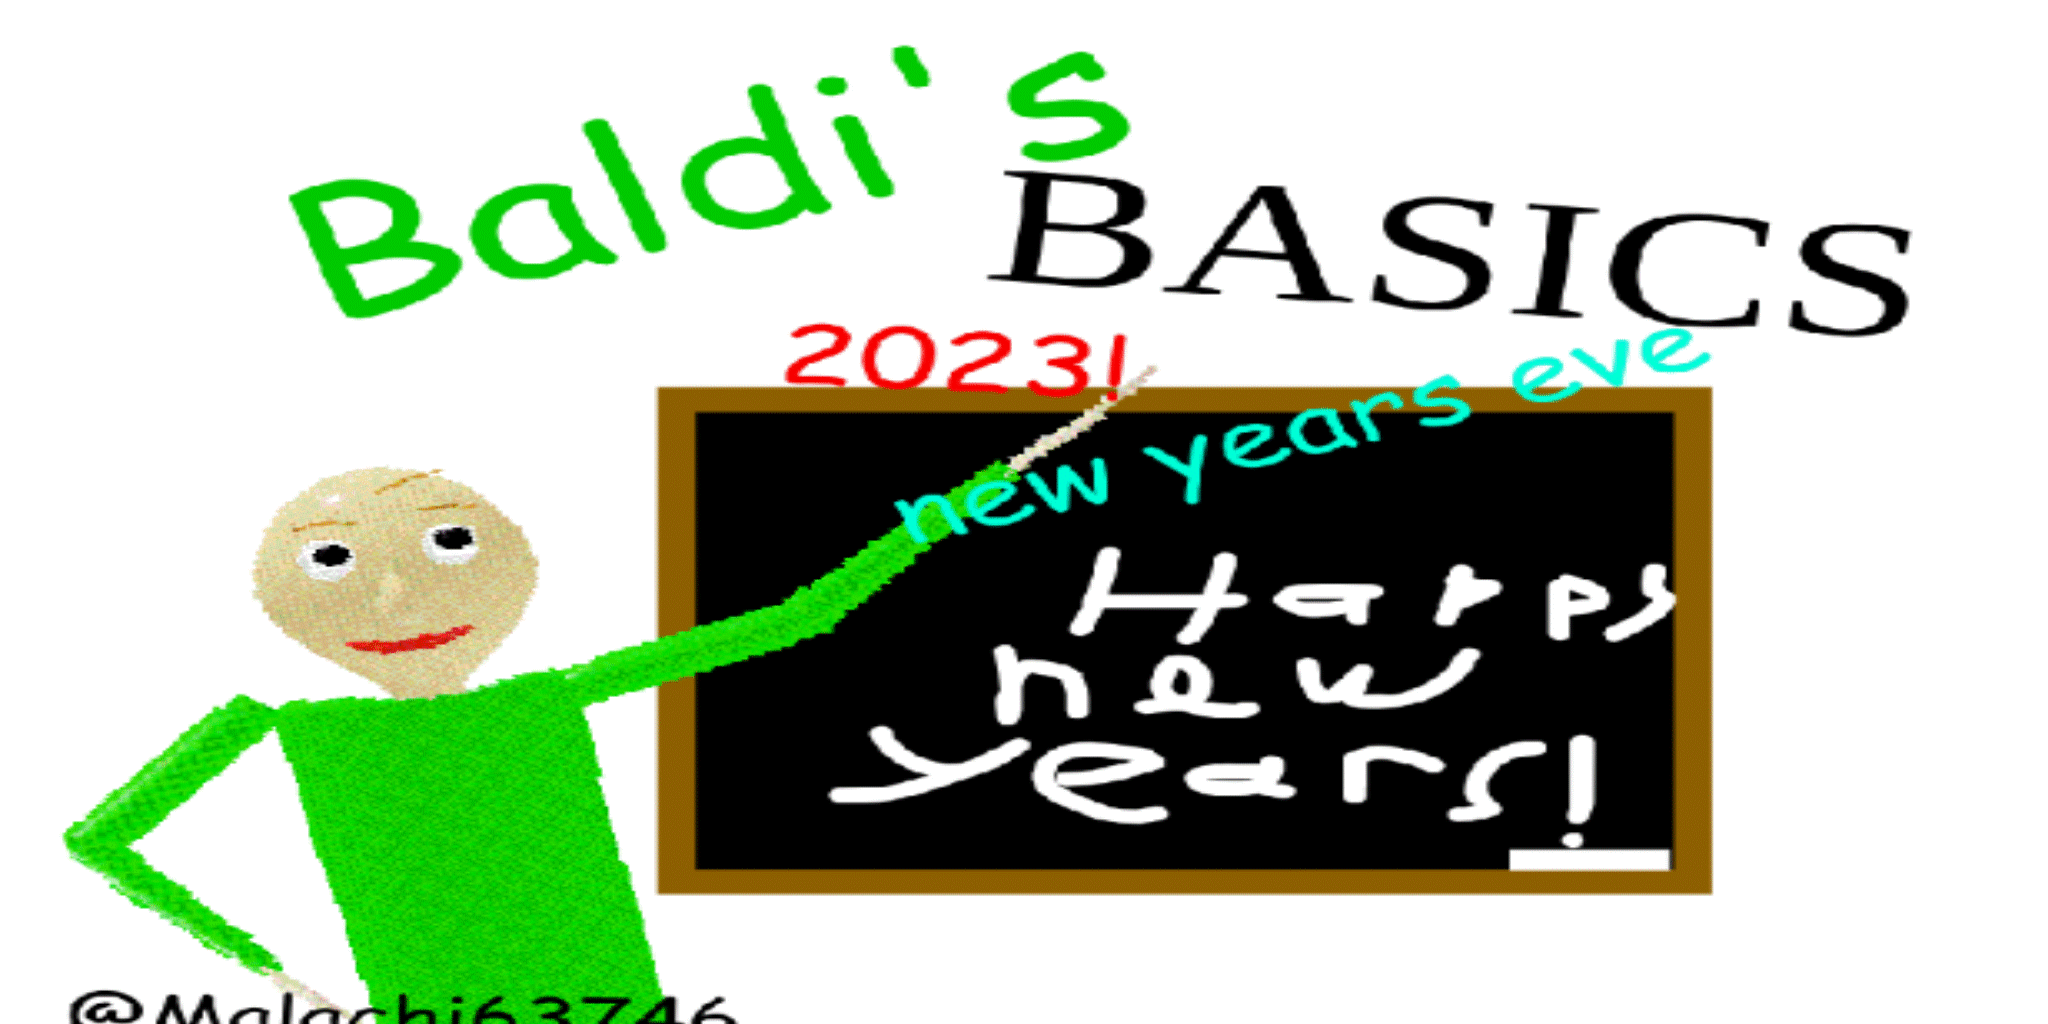 Baldi's BASICS 2023!